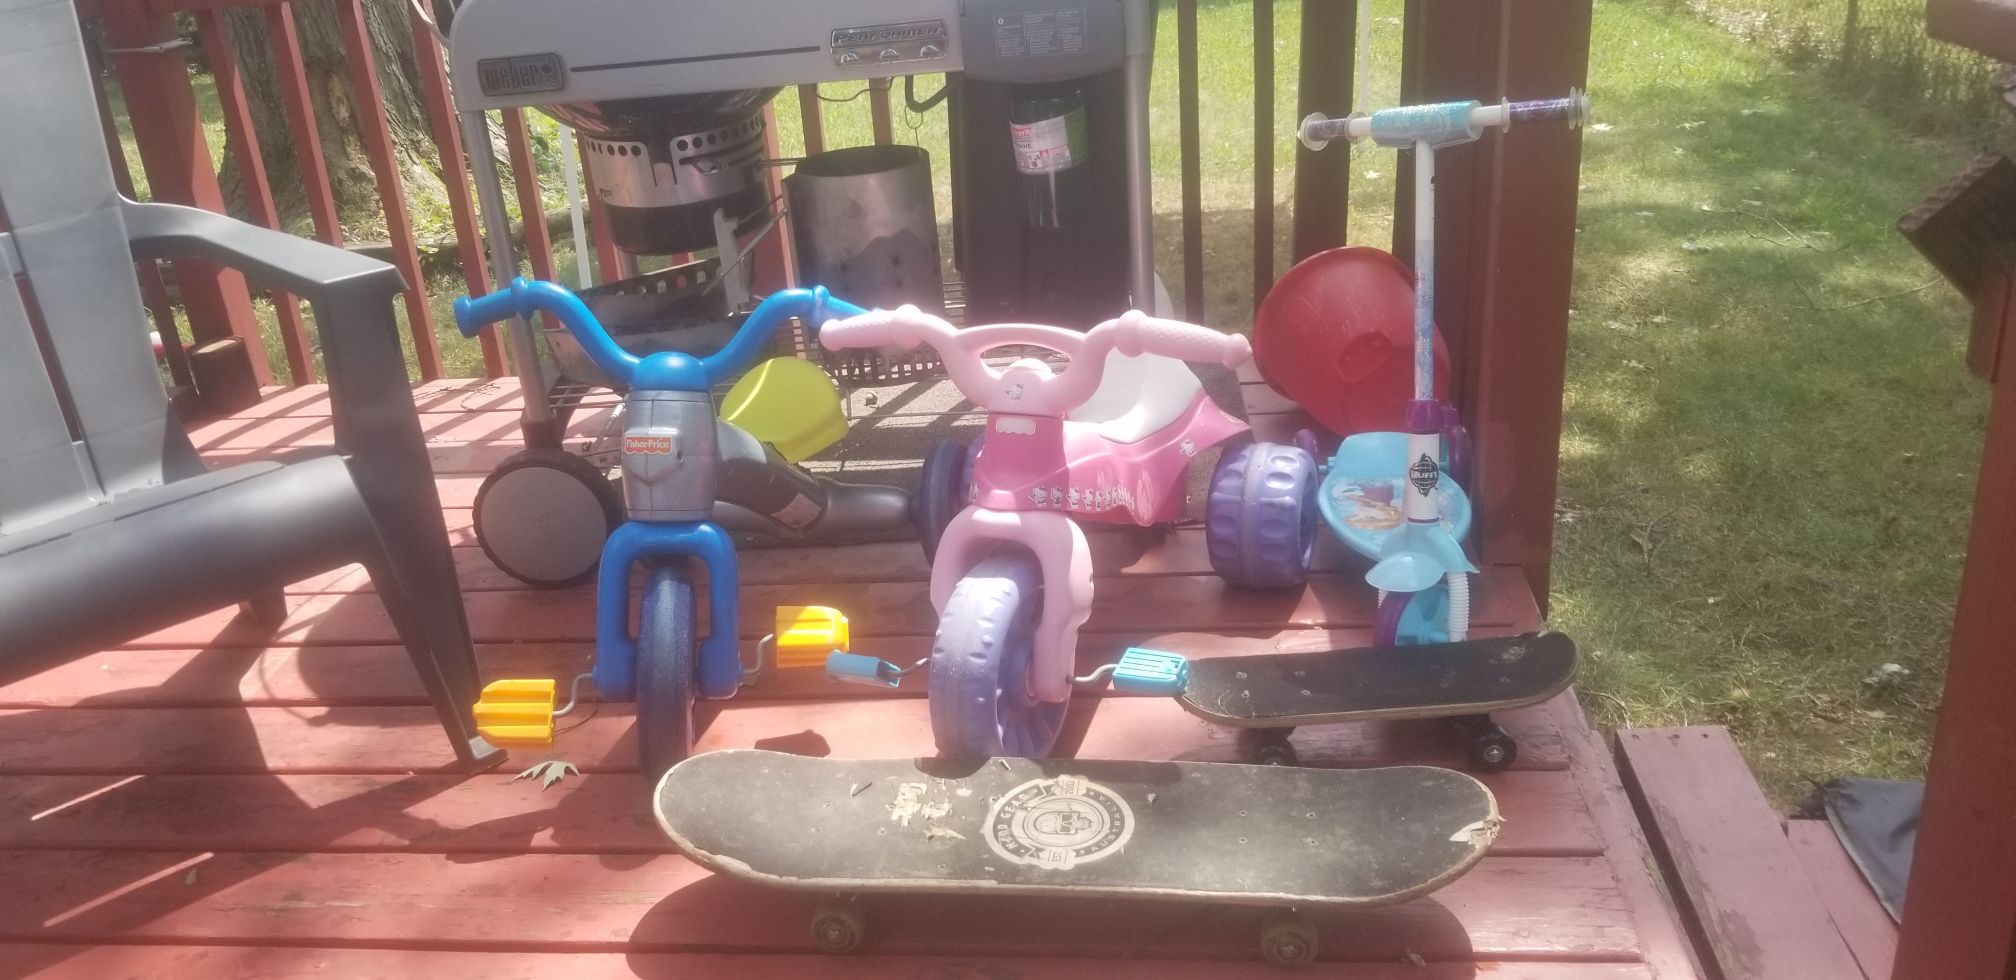 Kids bike toys